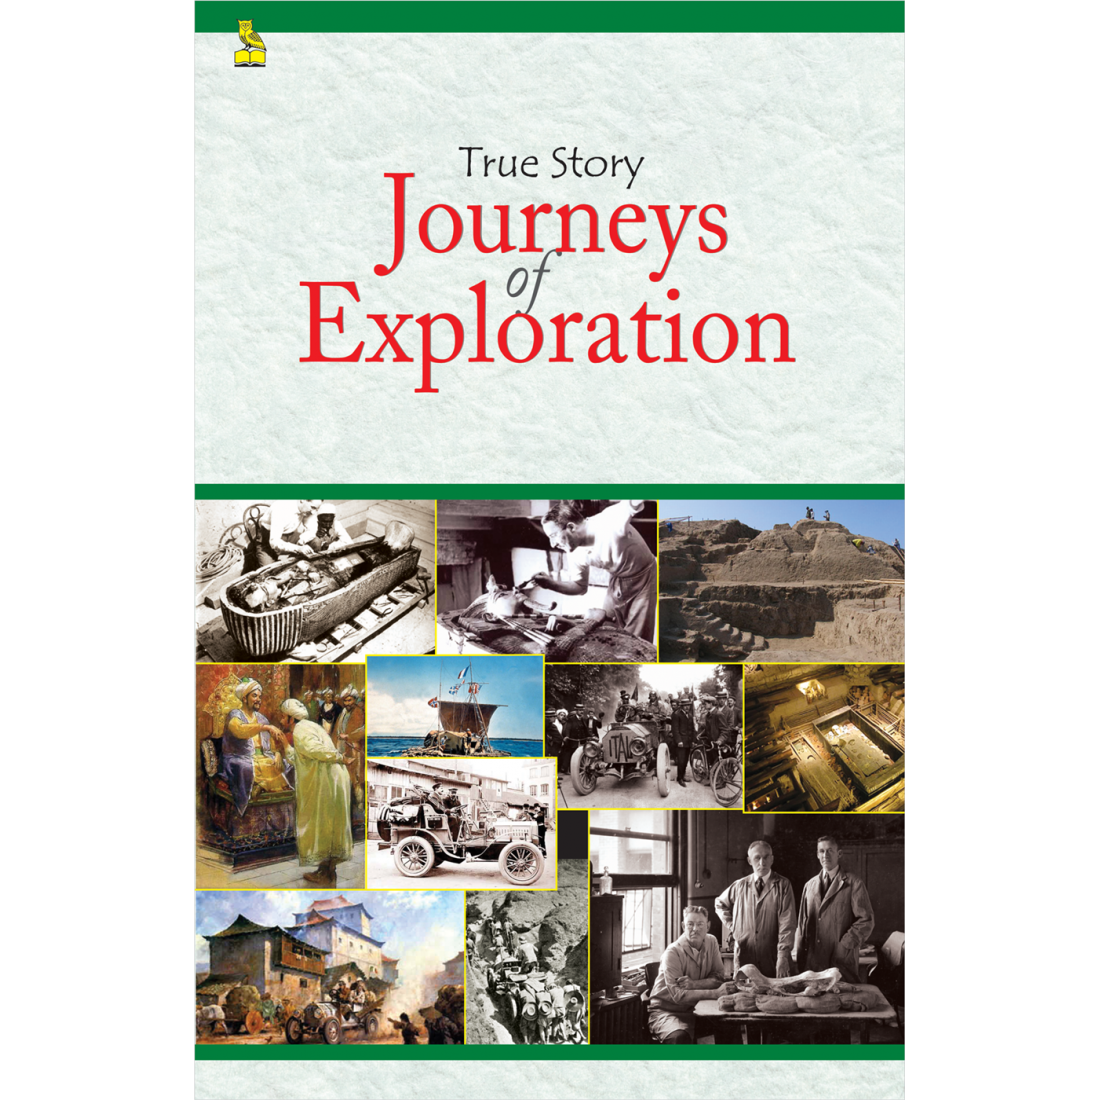 True Story Journey of Exploration